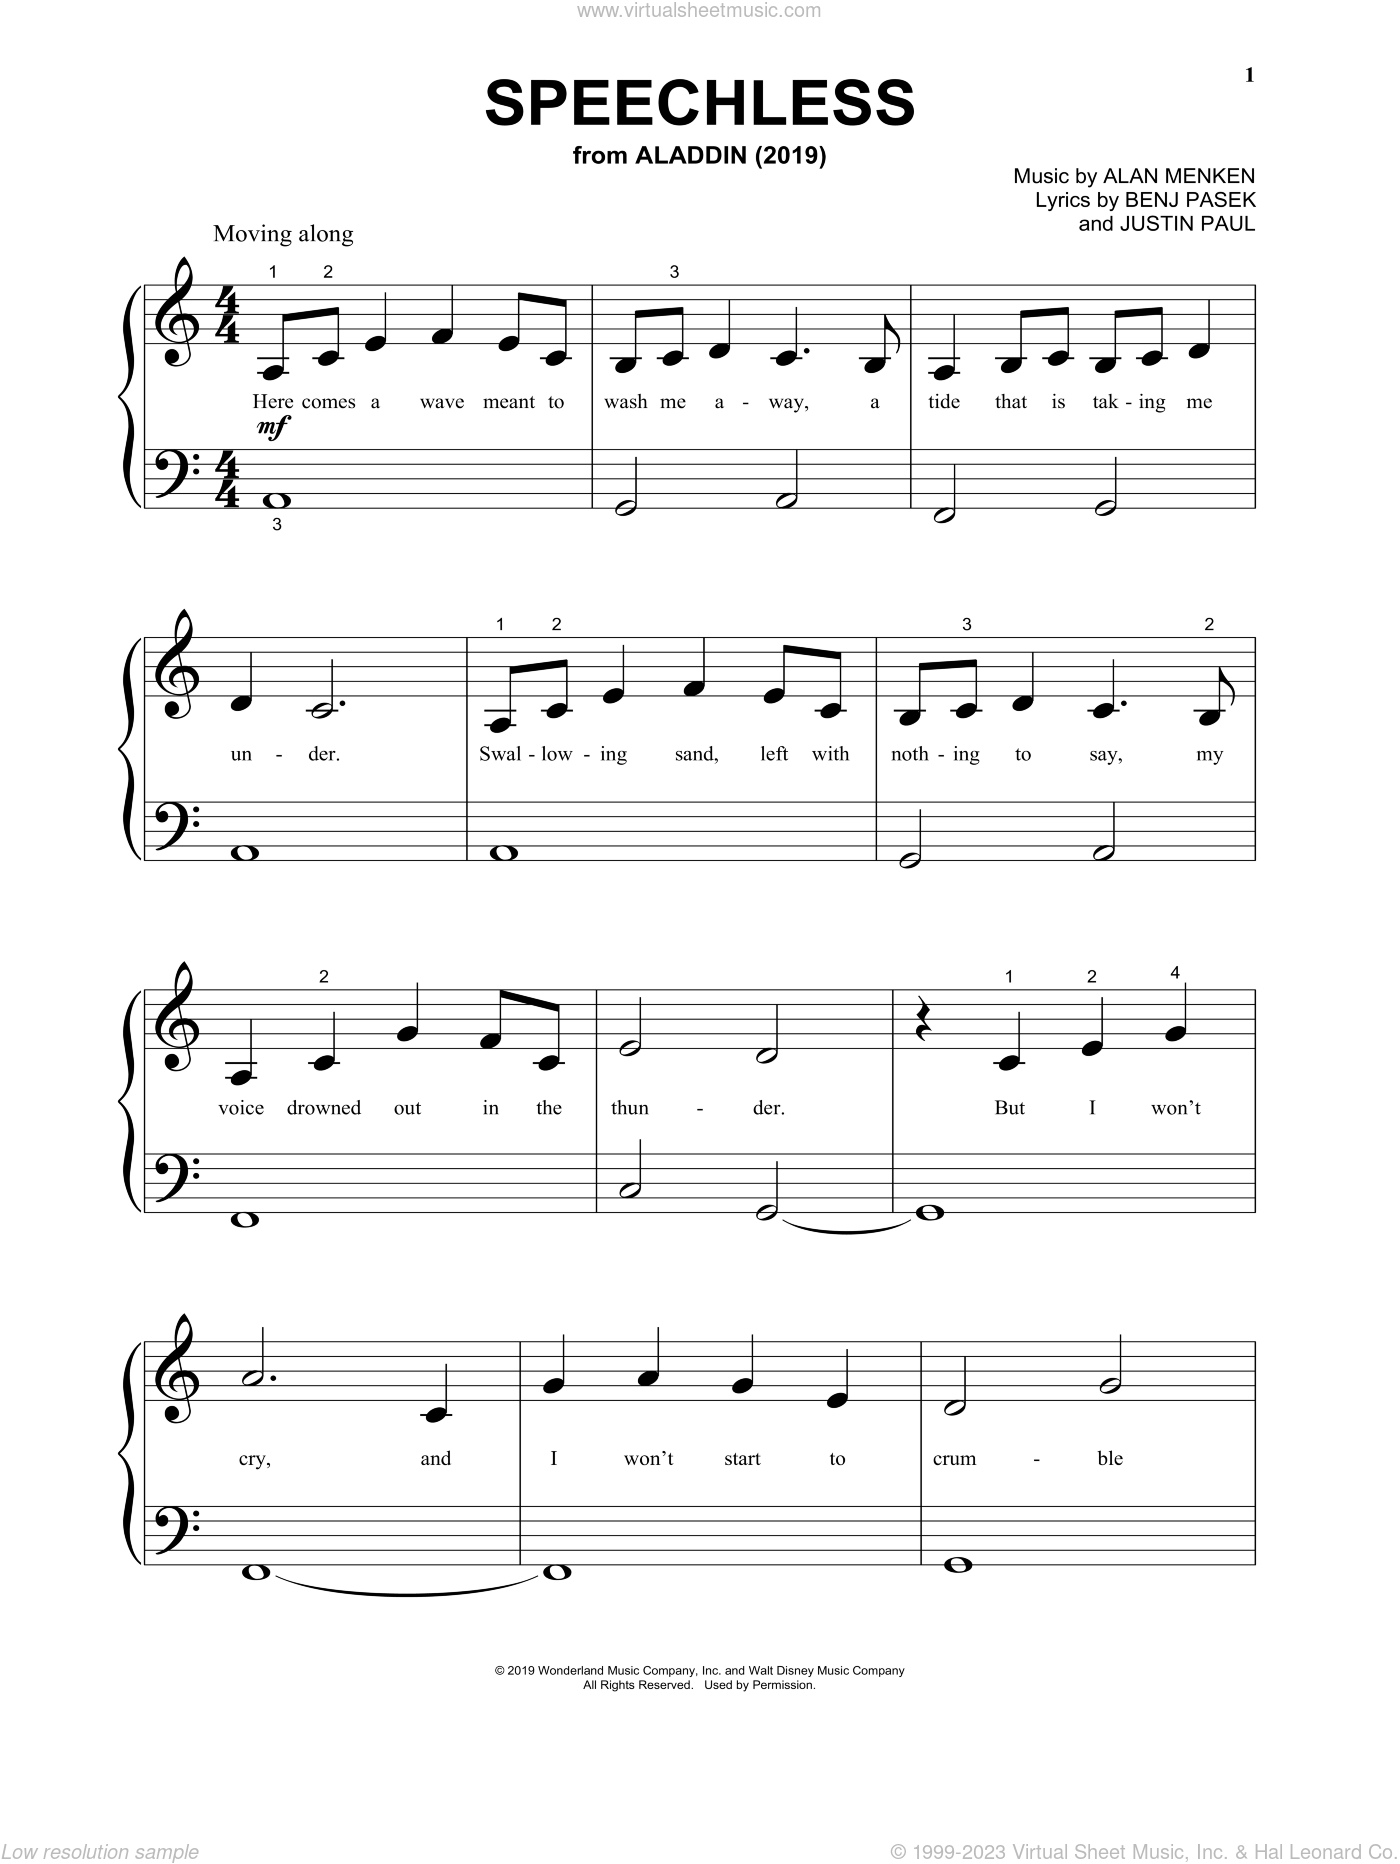 Scott - Speechless (from Disney's Aladdin) sheet music for piano solo